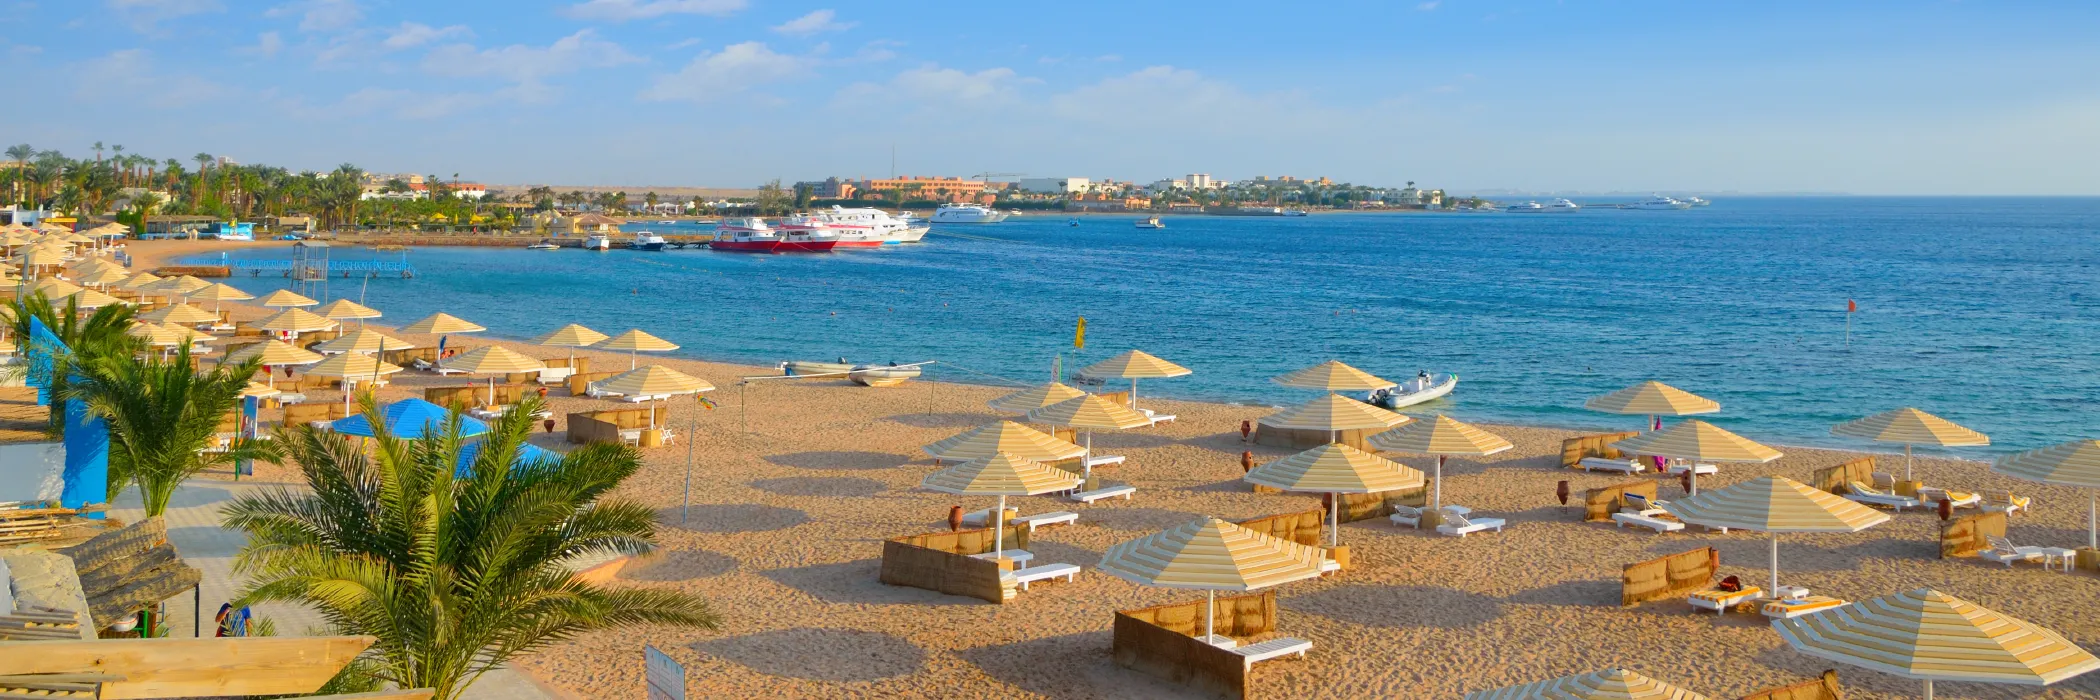 All Inclusive Egypt Holidays - Sharm El Sheikh